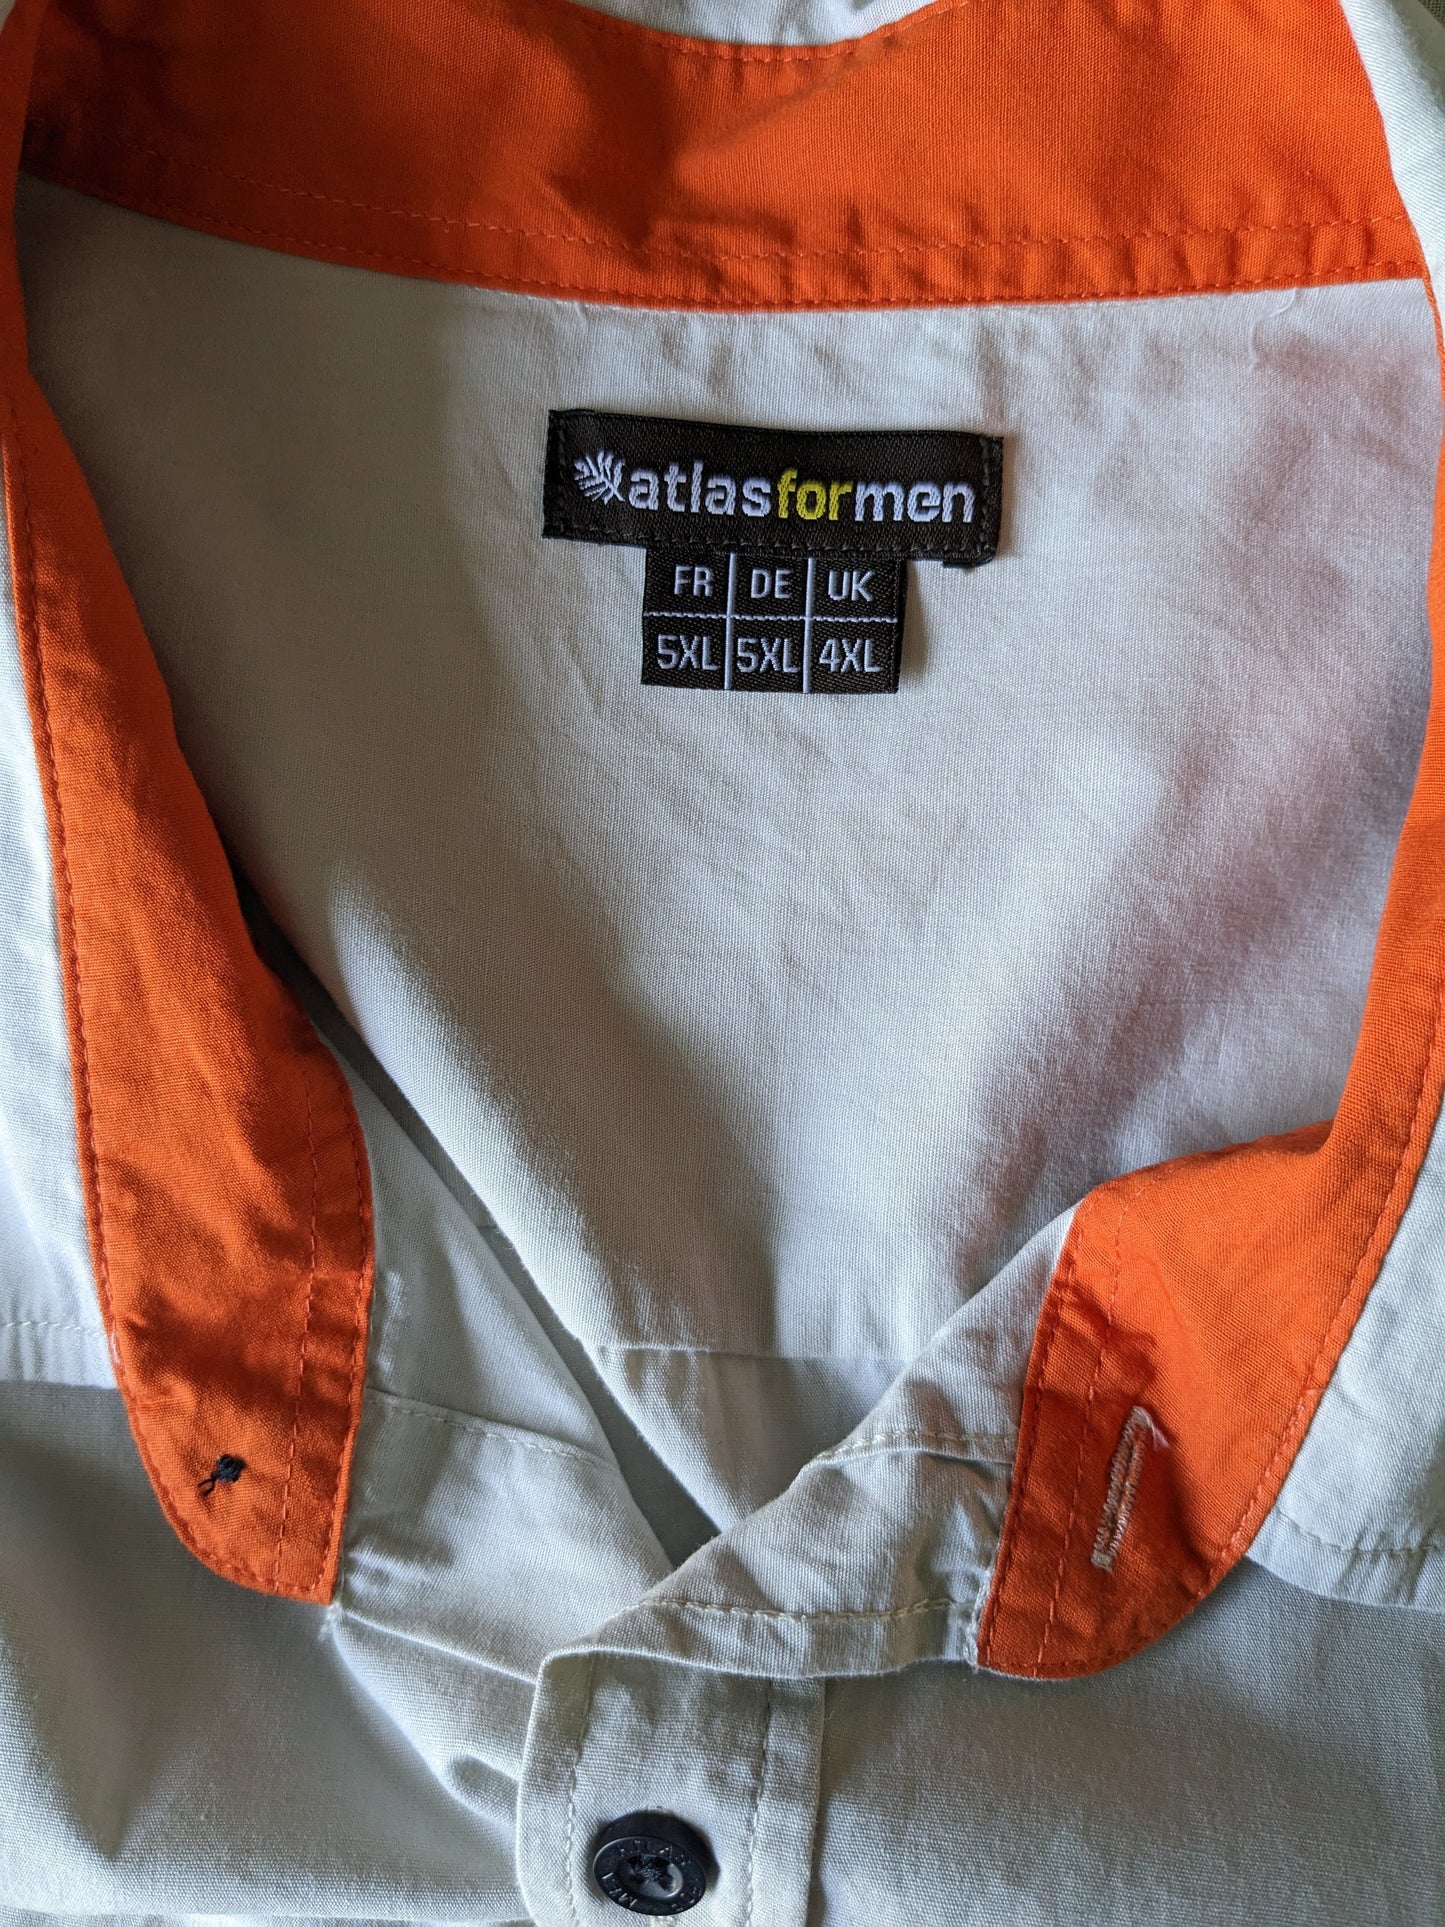 Atlas para hombres camisa manga corta. Color beige. Acentos de naranja. Tamaño 5xl / xxxxxl.